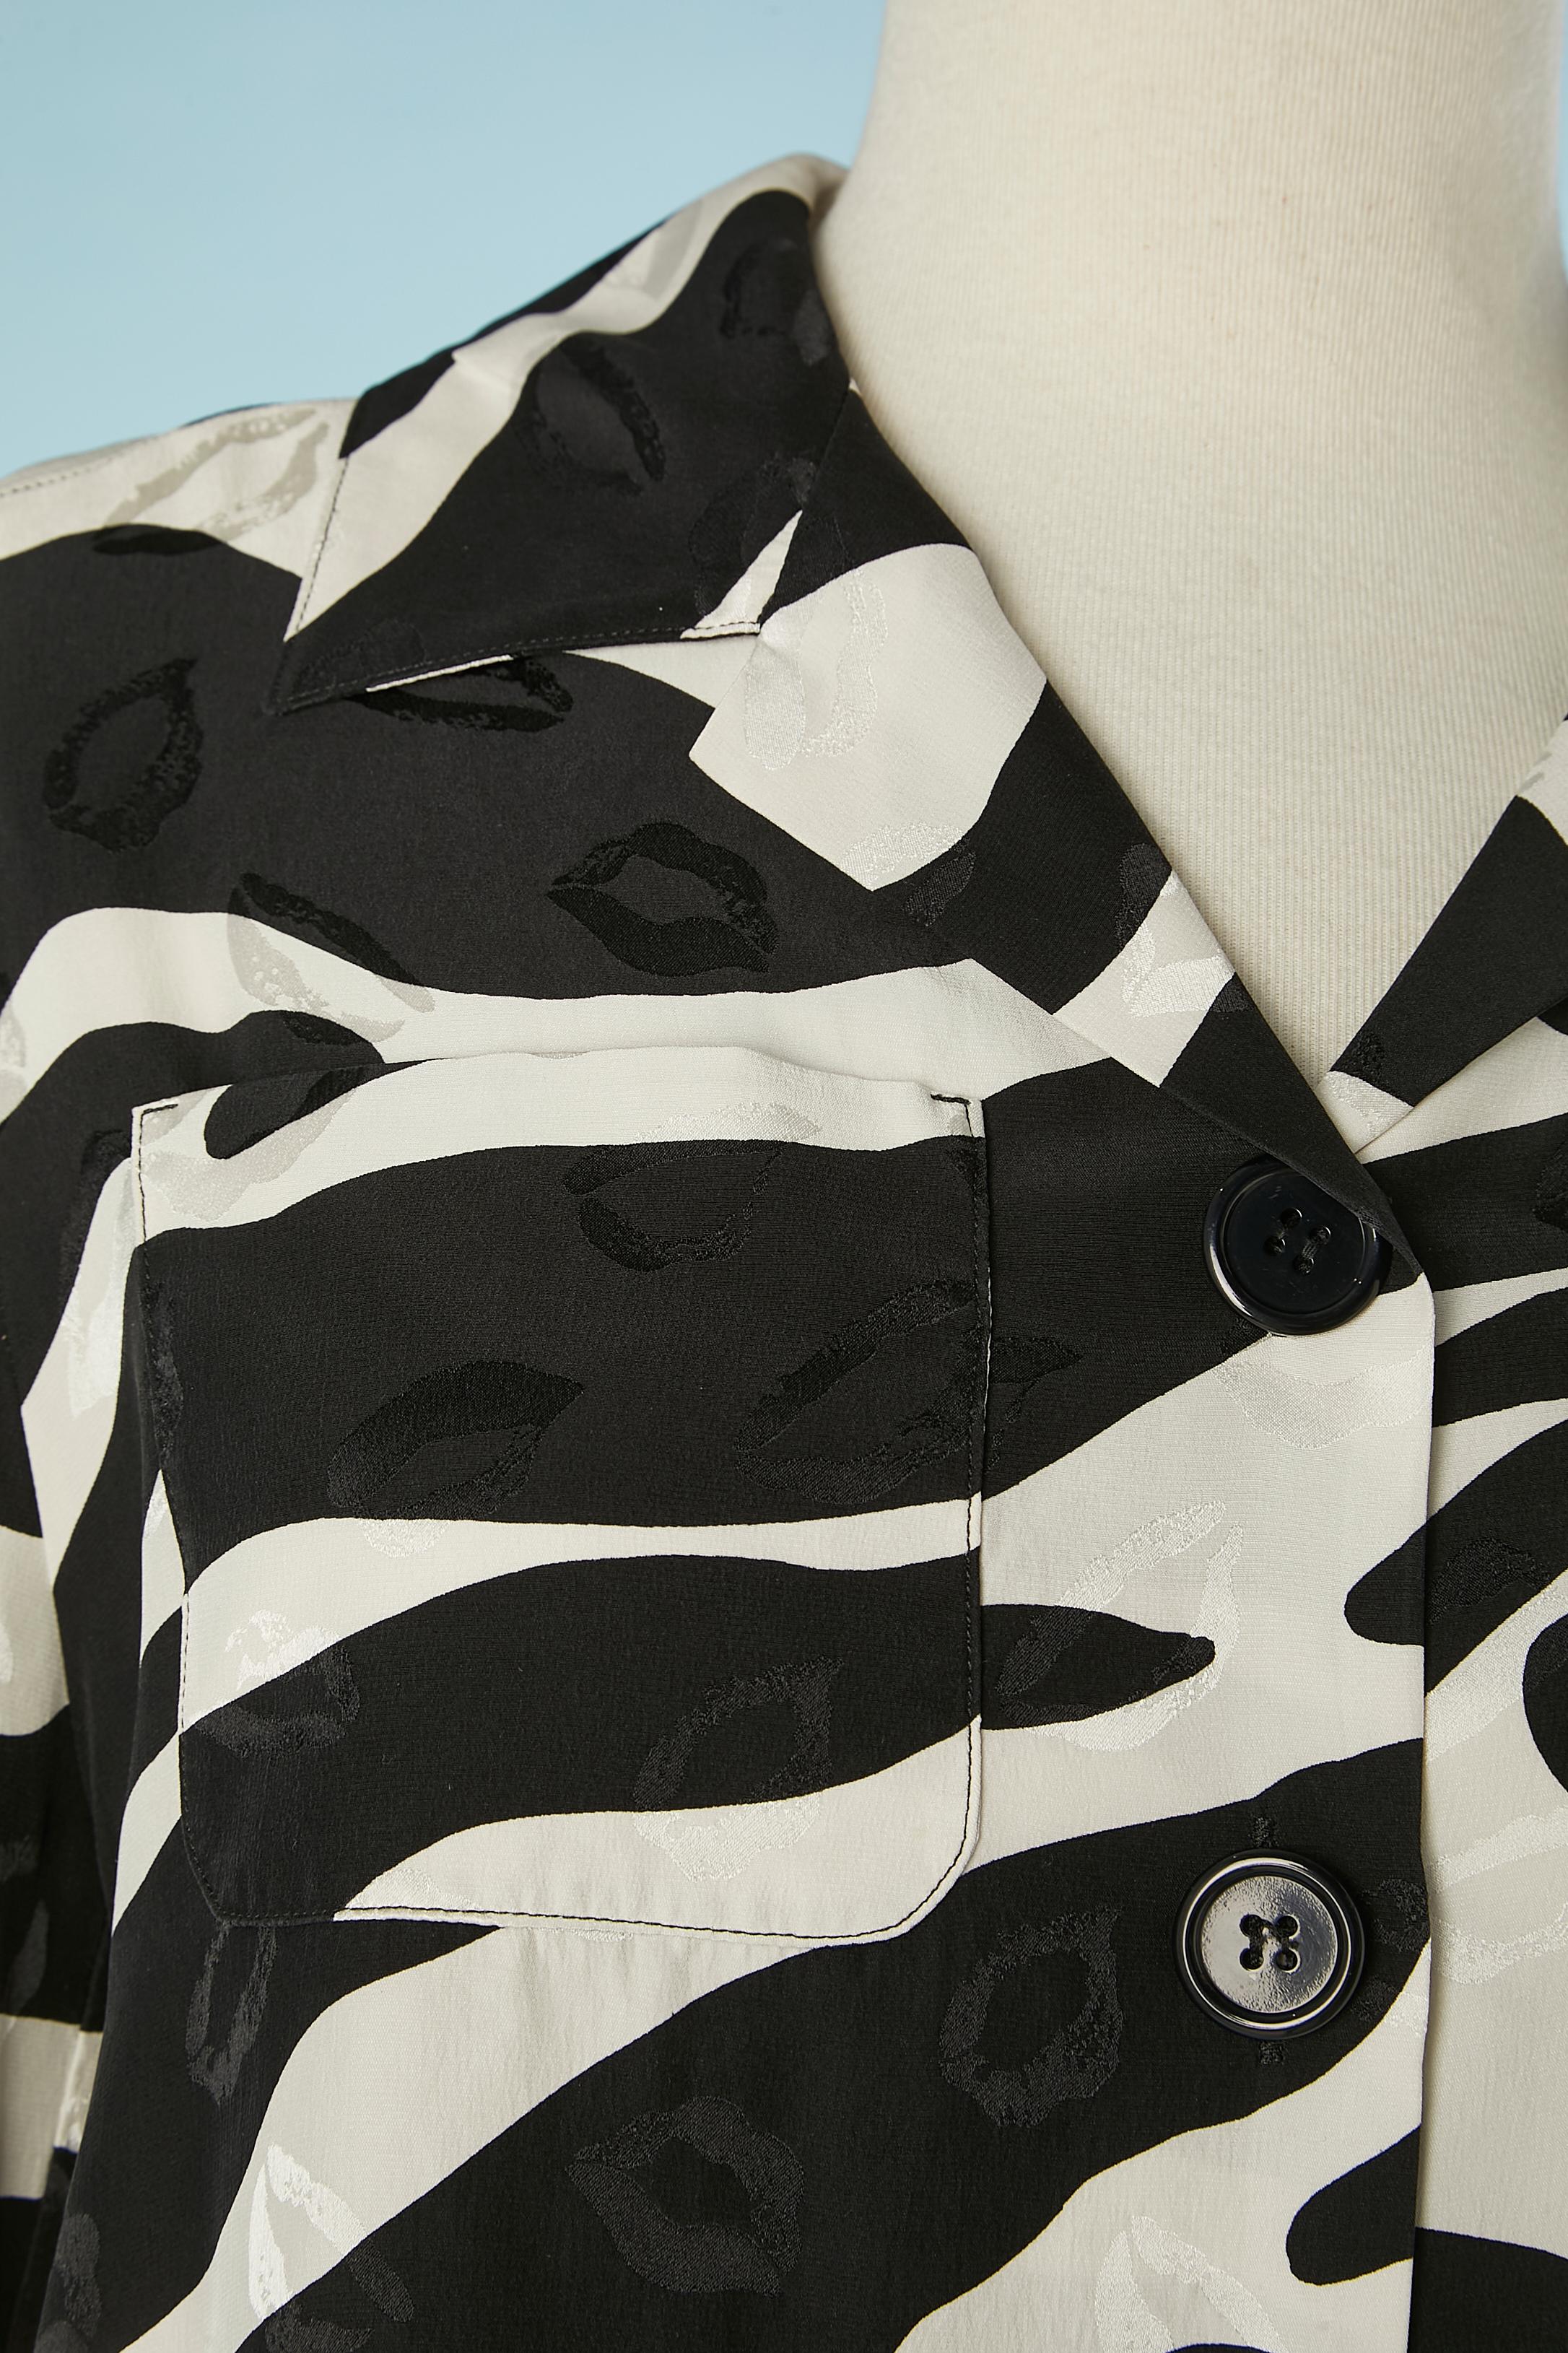 Black&white silk jacquard shirt with zebra print, 